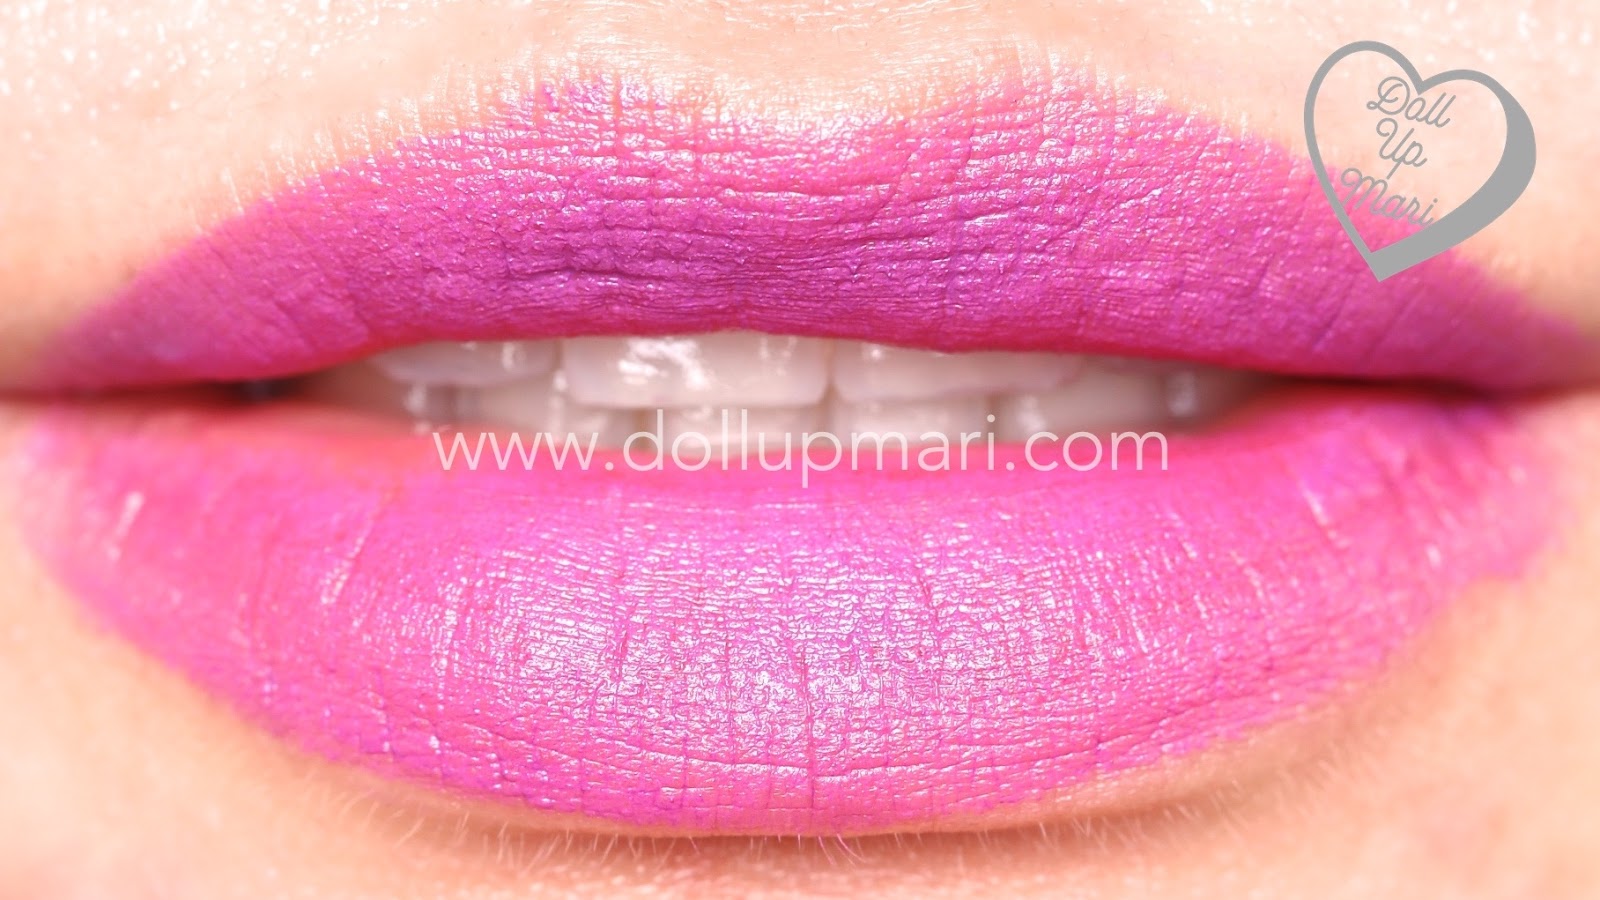 lip swatch of Hot Plum shade of AVON Perfectly Matte Lipstick